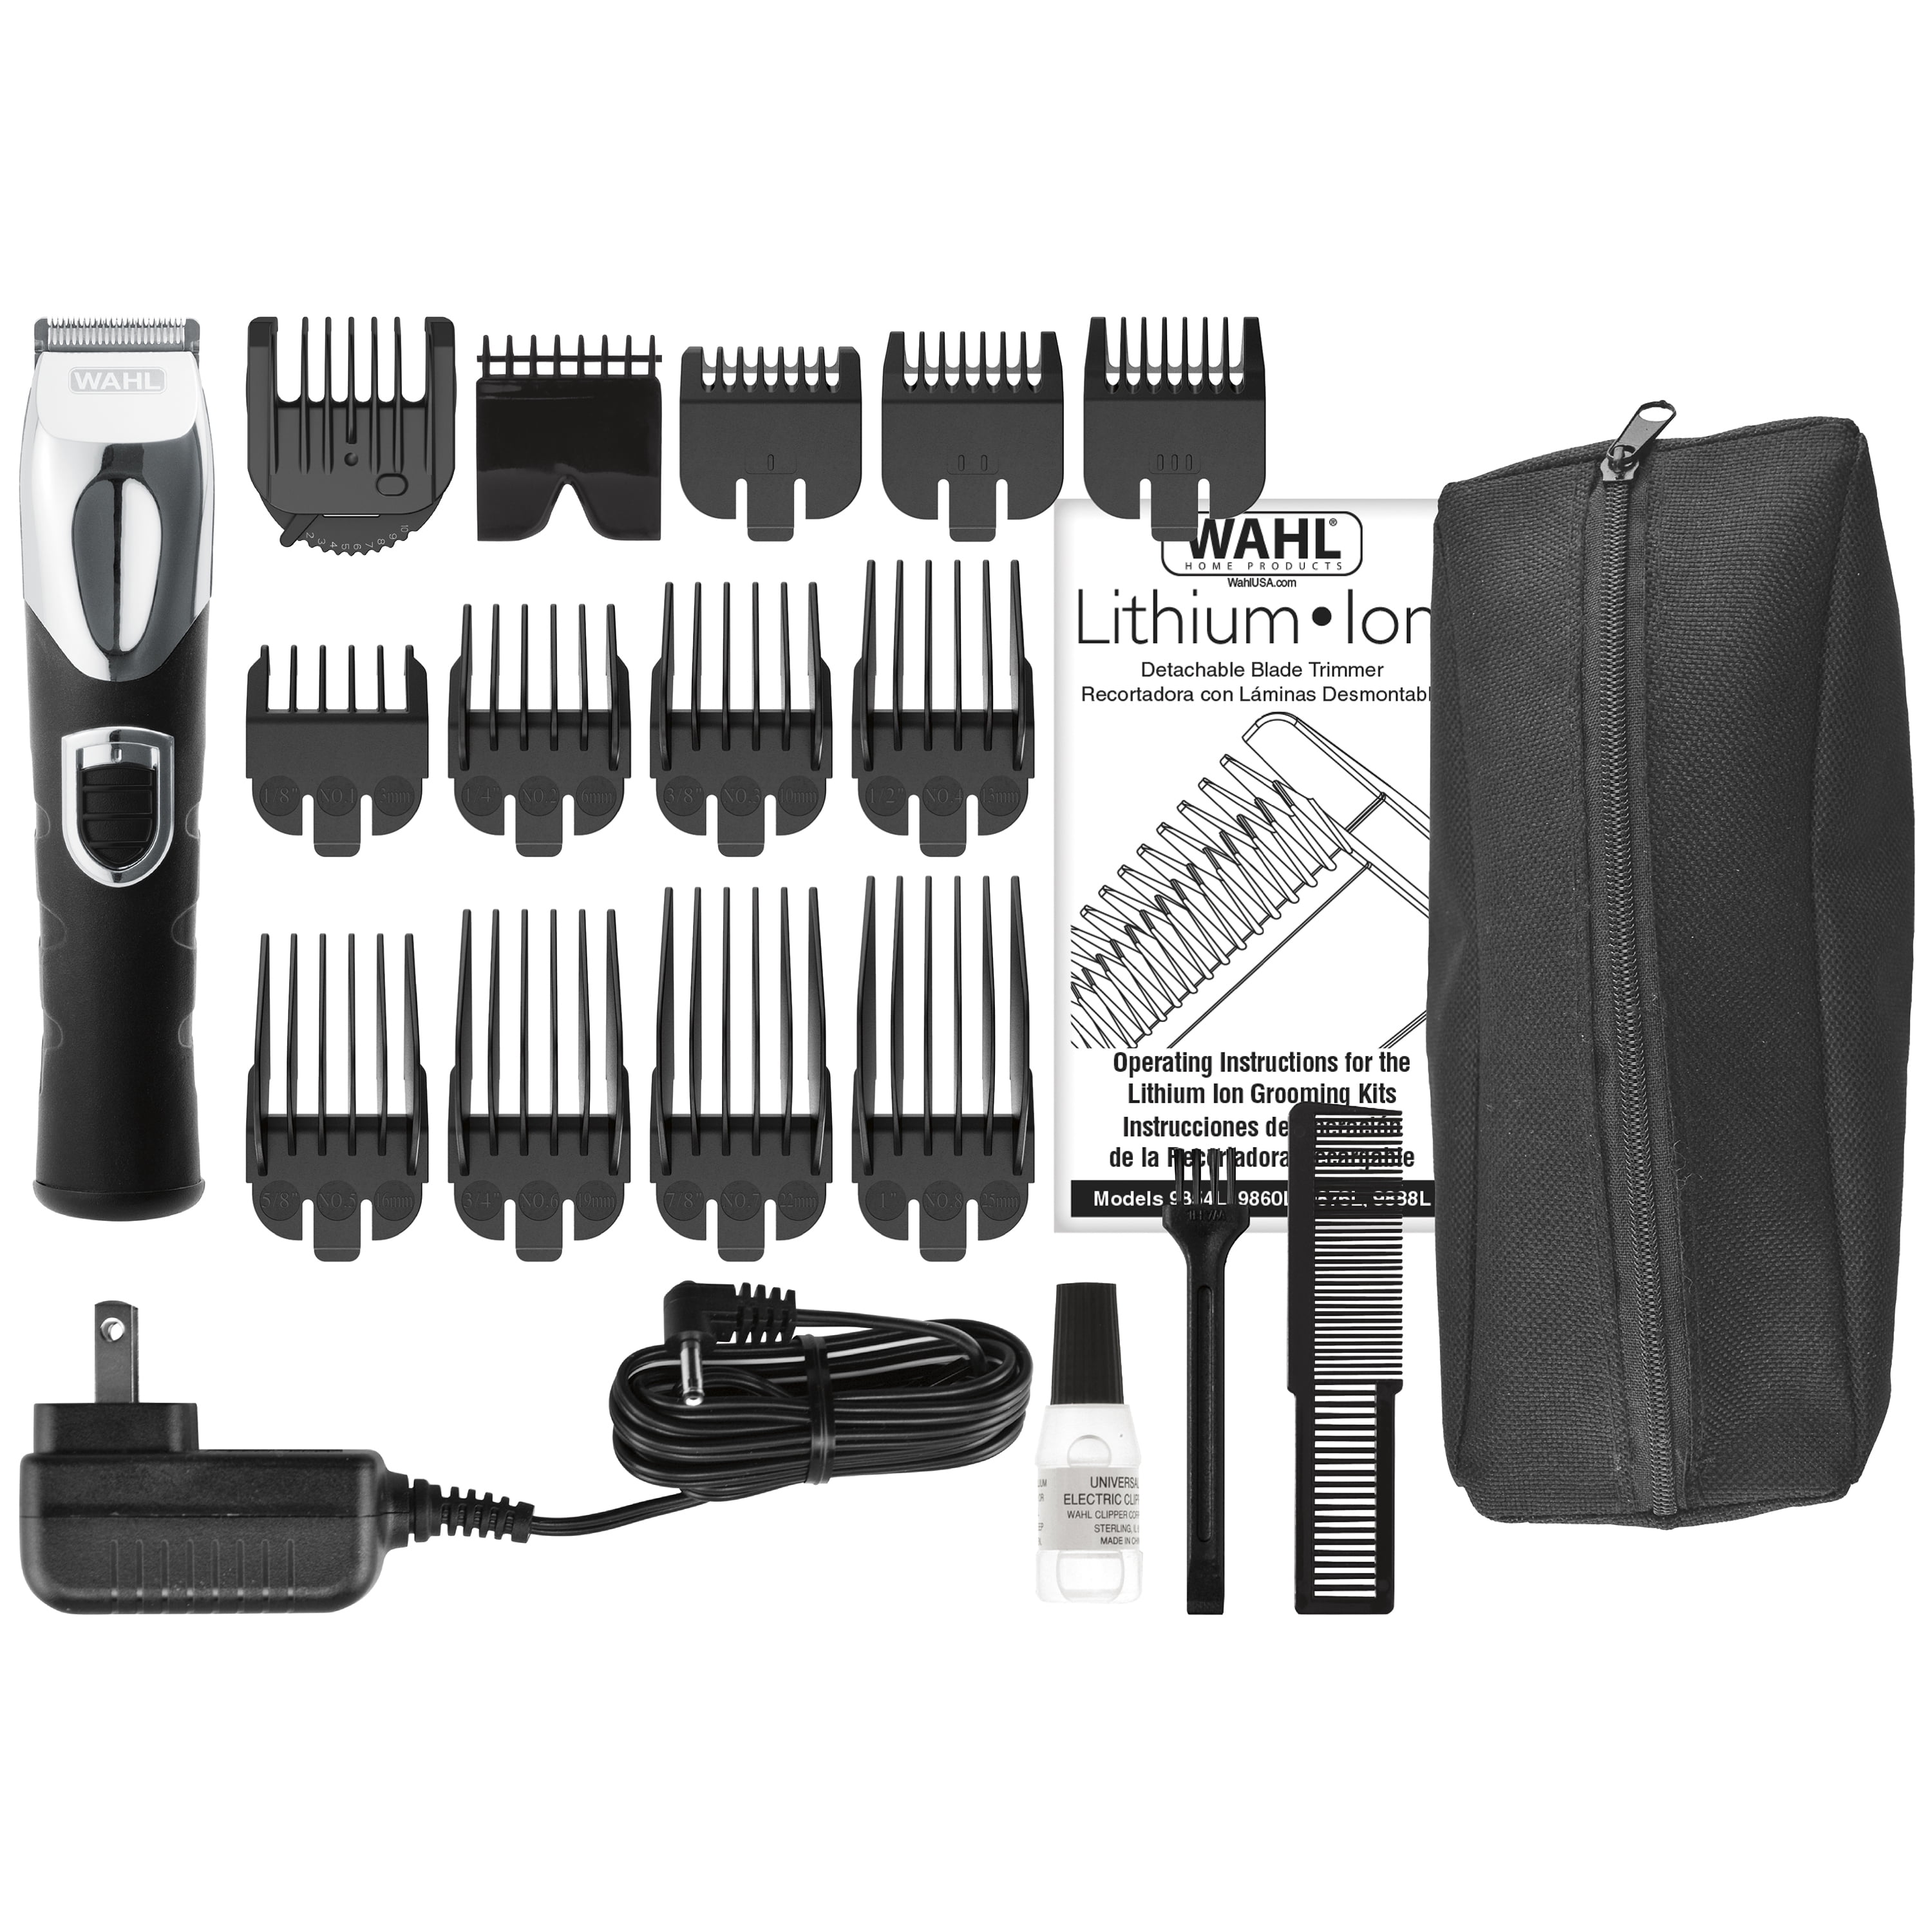 wahl total beard trimmer kit